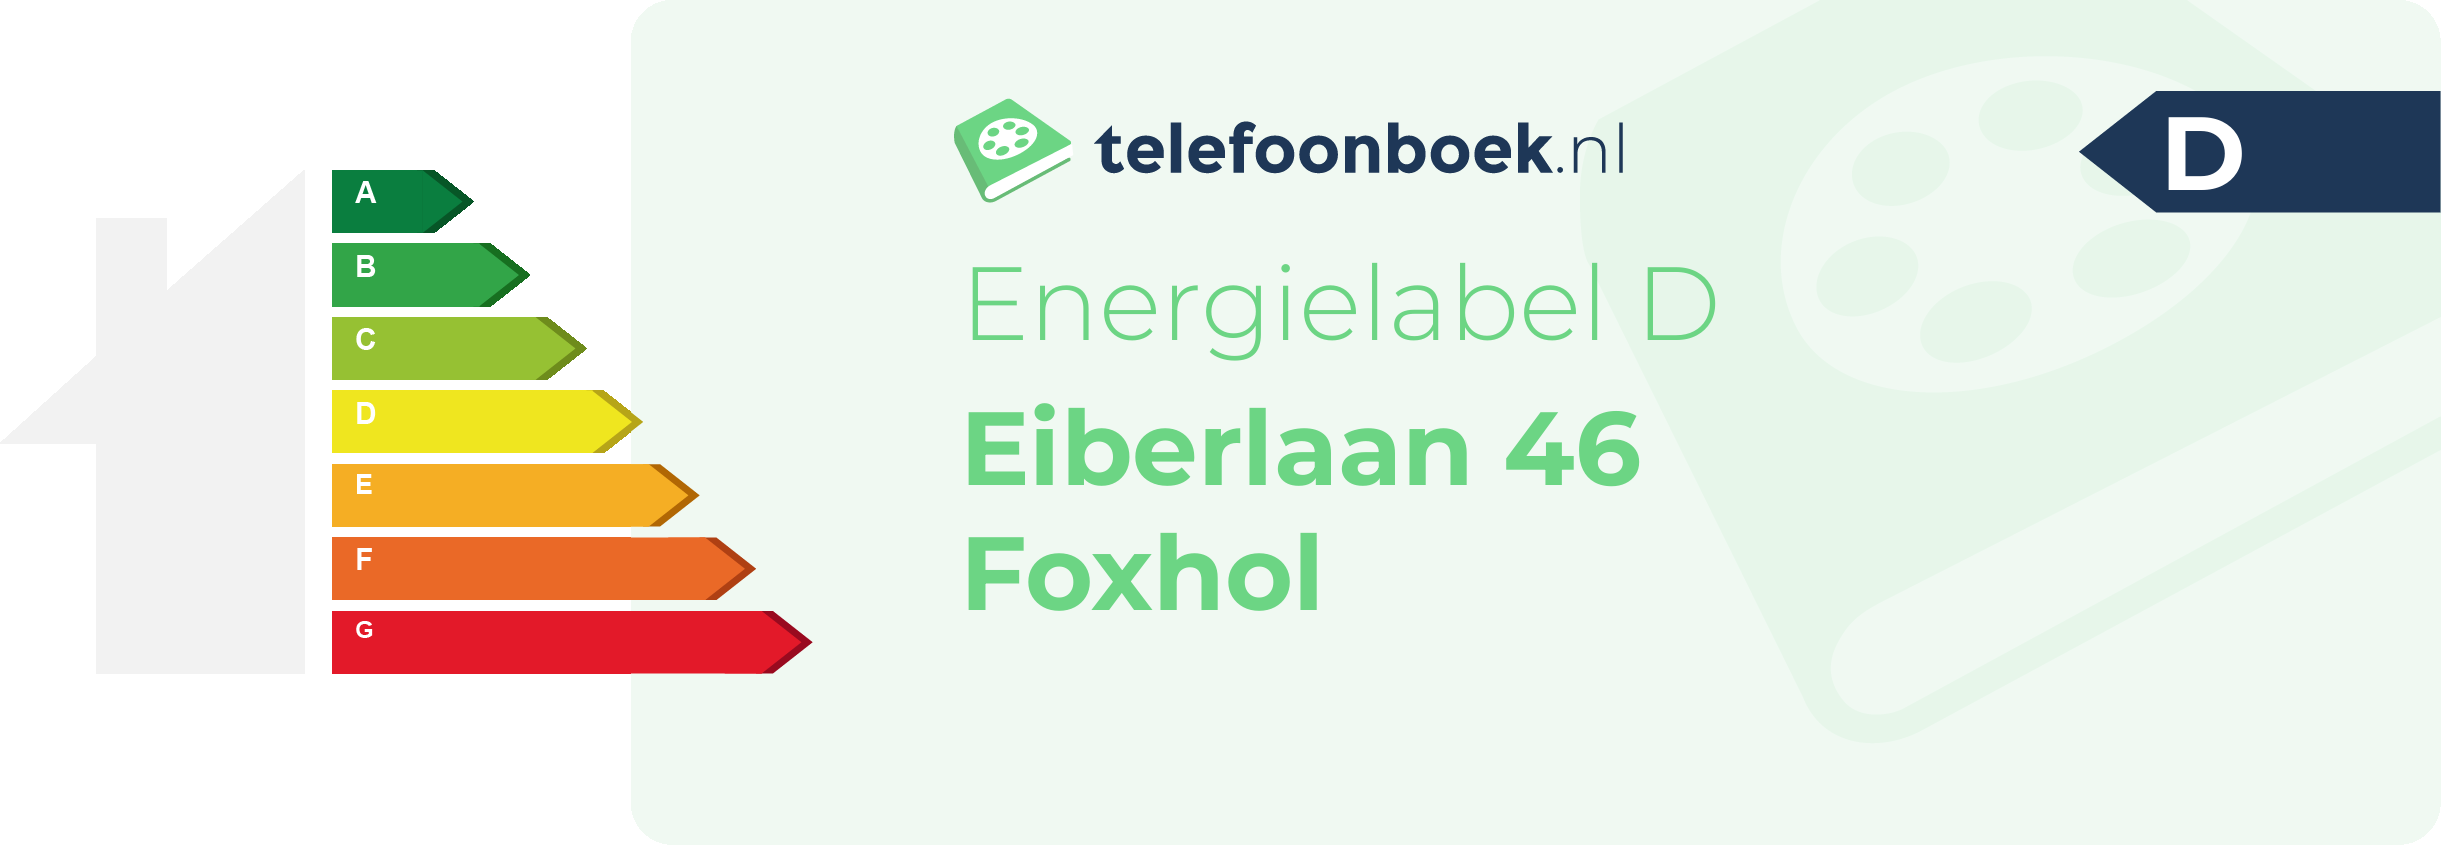 Energielabel Eiberlaan 46 Foxhol